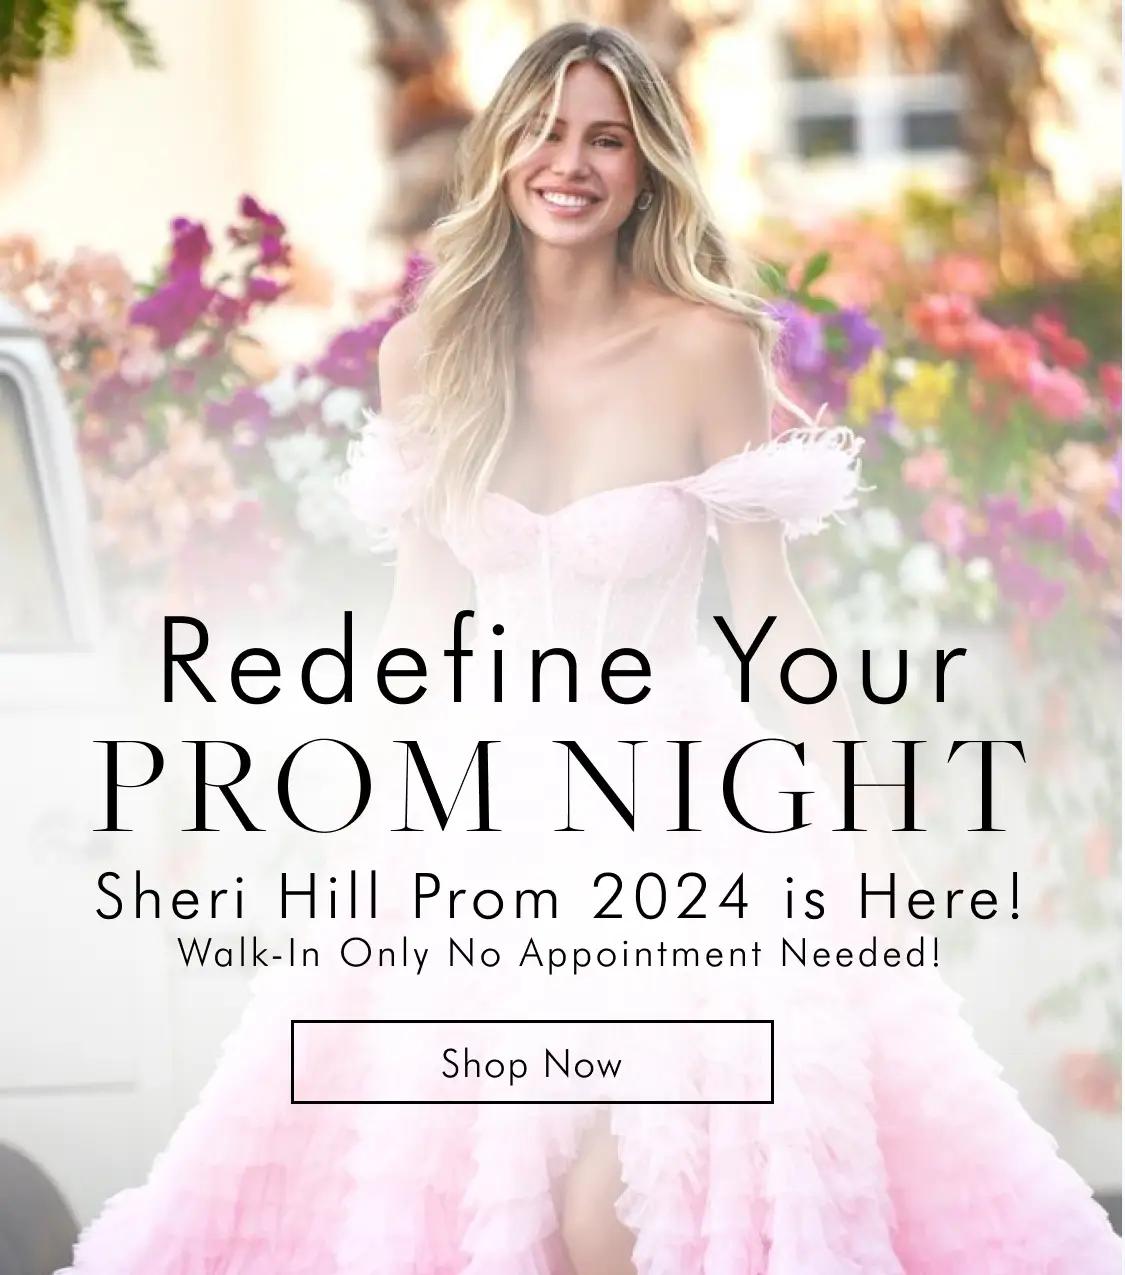 Mobile Sheri Hill Prom 2024 Banner